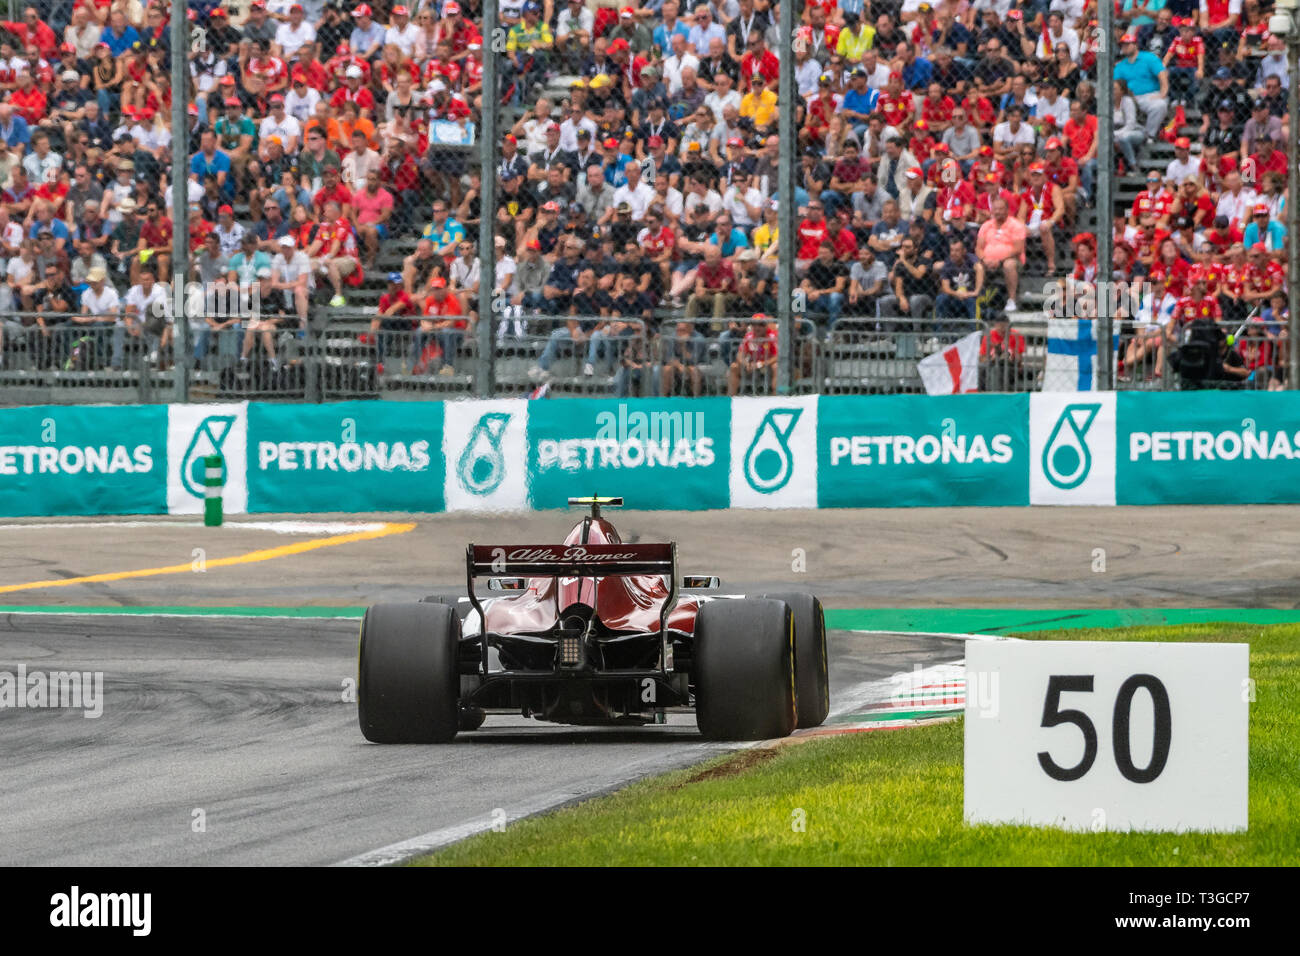 Monza/Italy - #16 Charles Leclerc (Alfa Romeo Sauber) at the Roggia chicane during the Italian GP Stock Photo